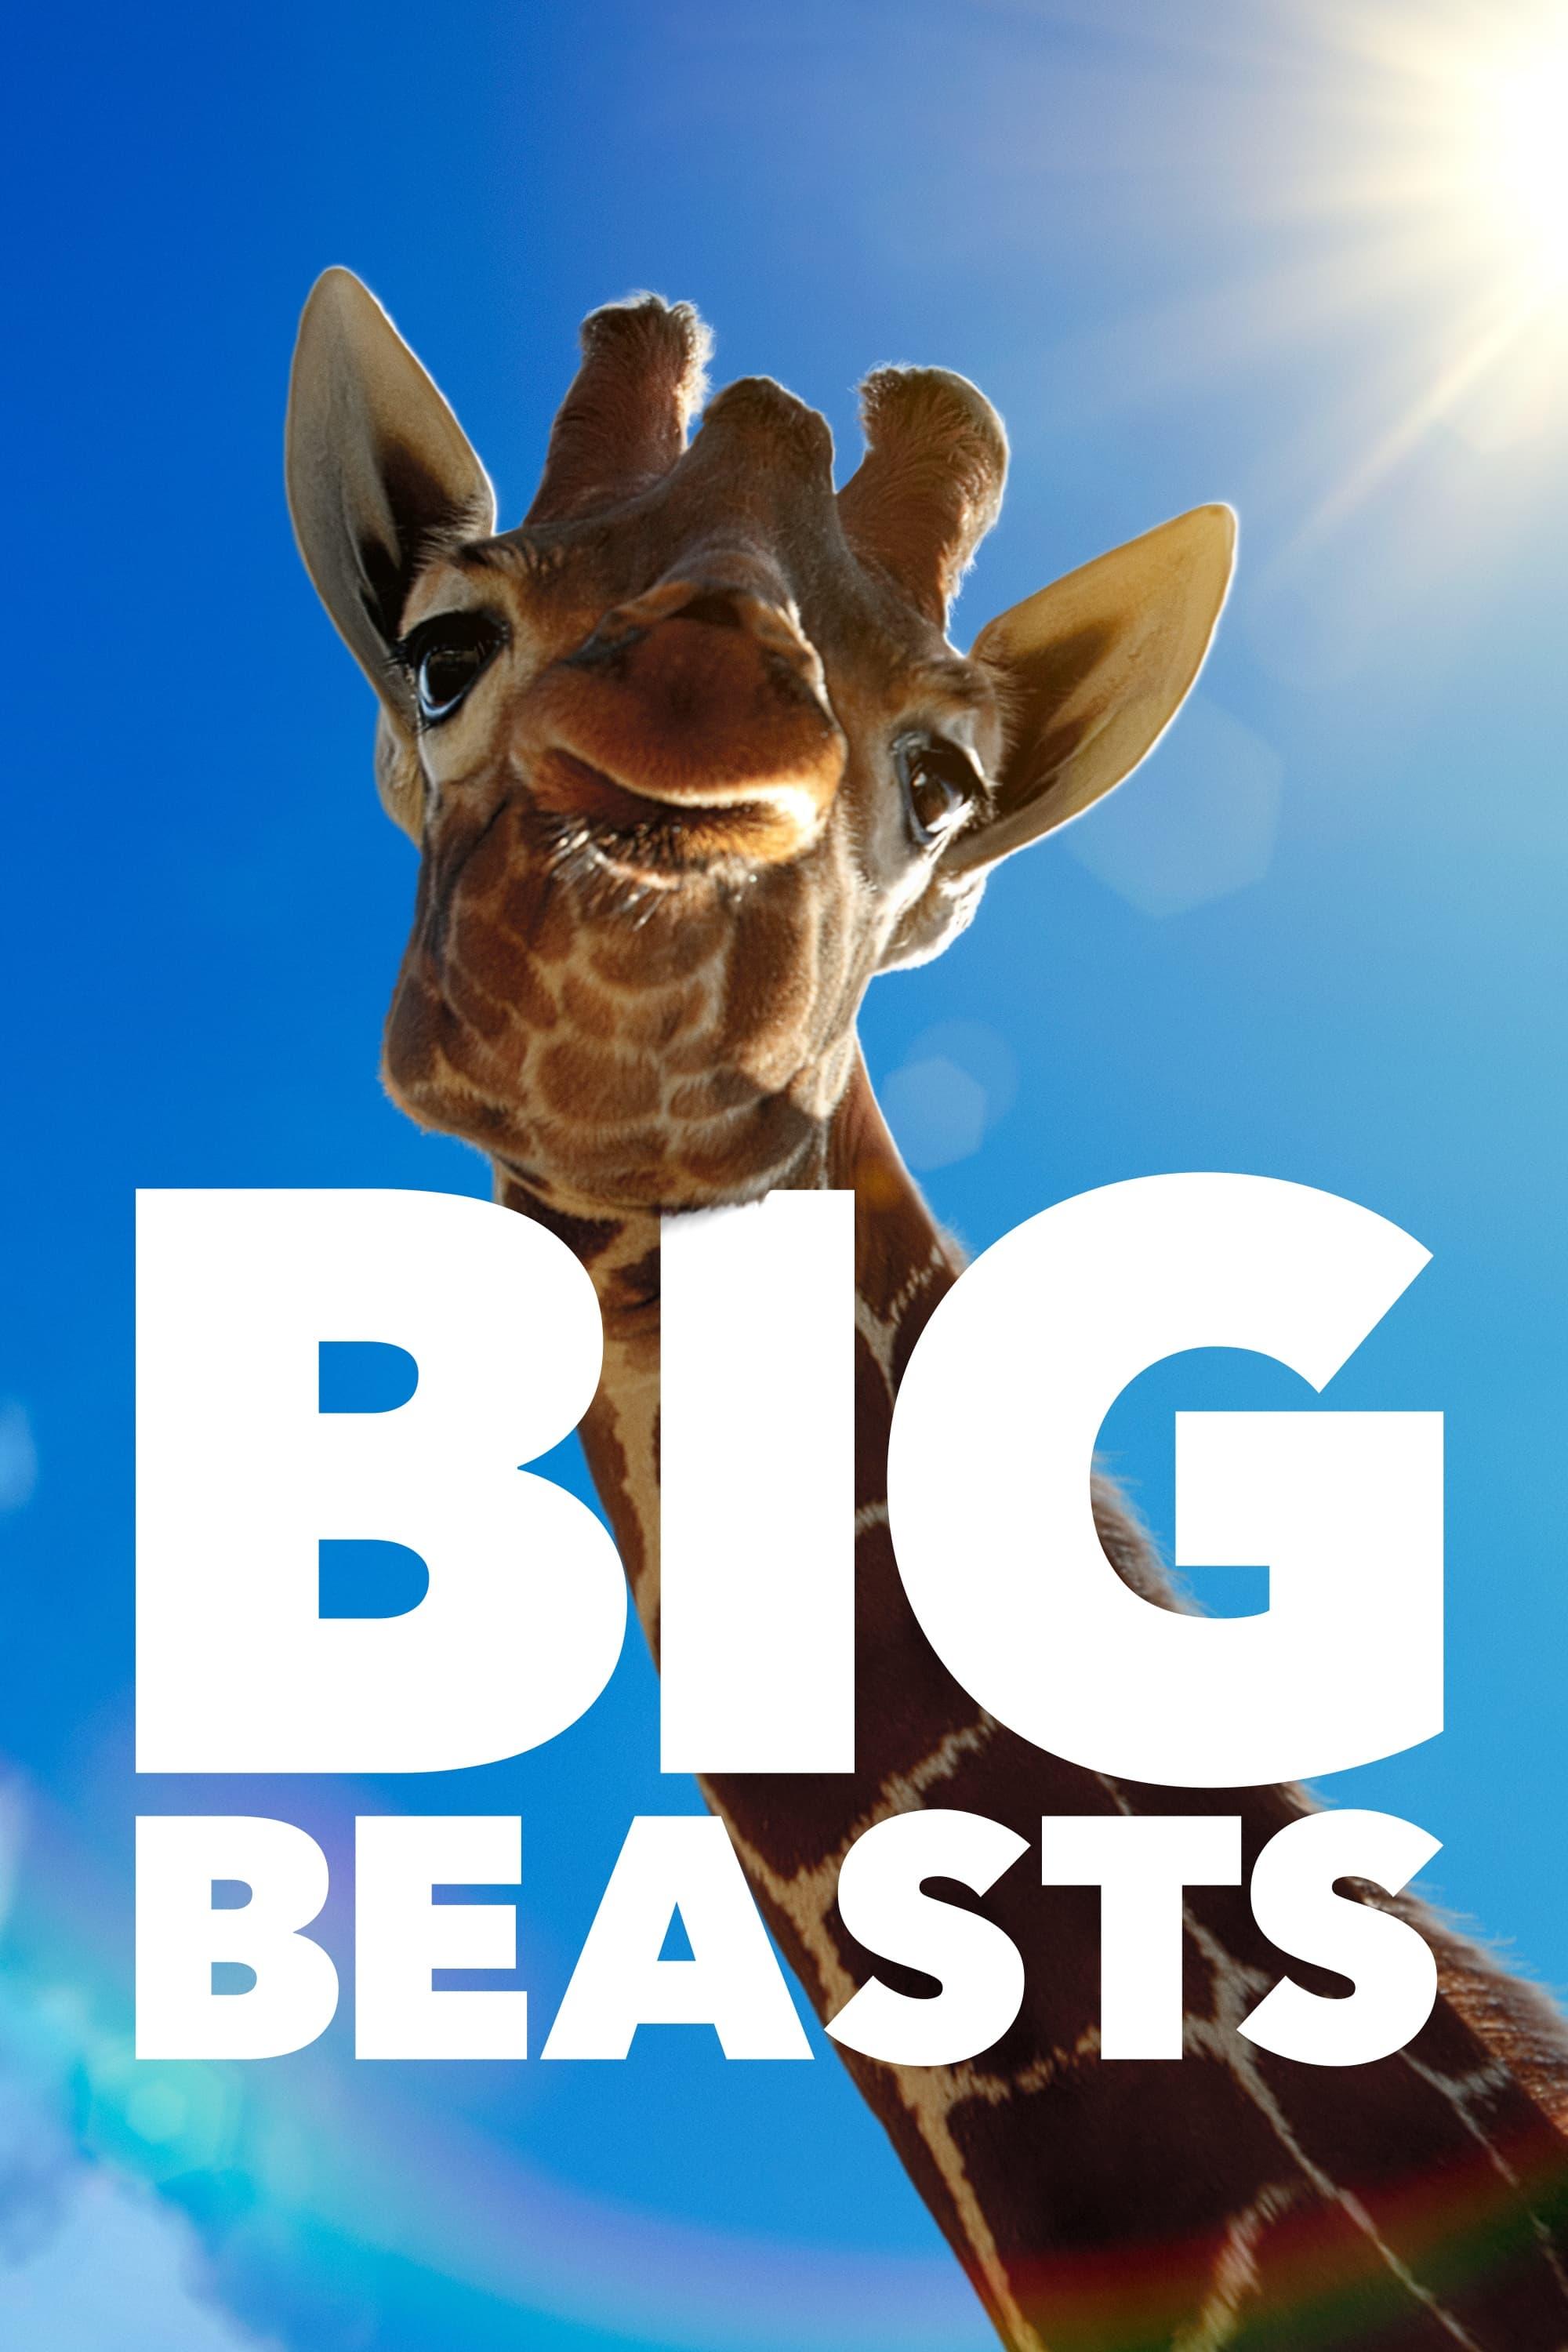 Big Beasts poster